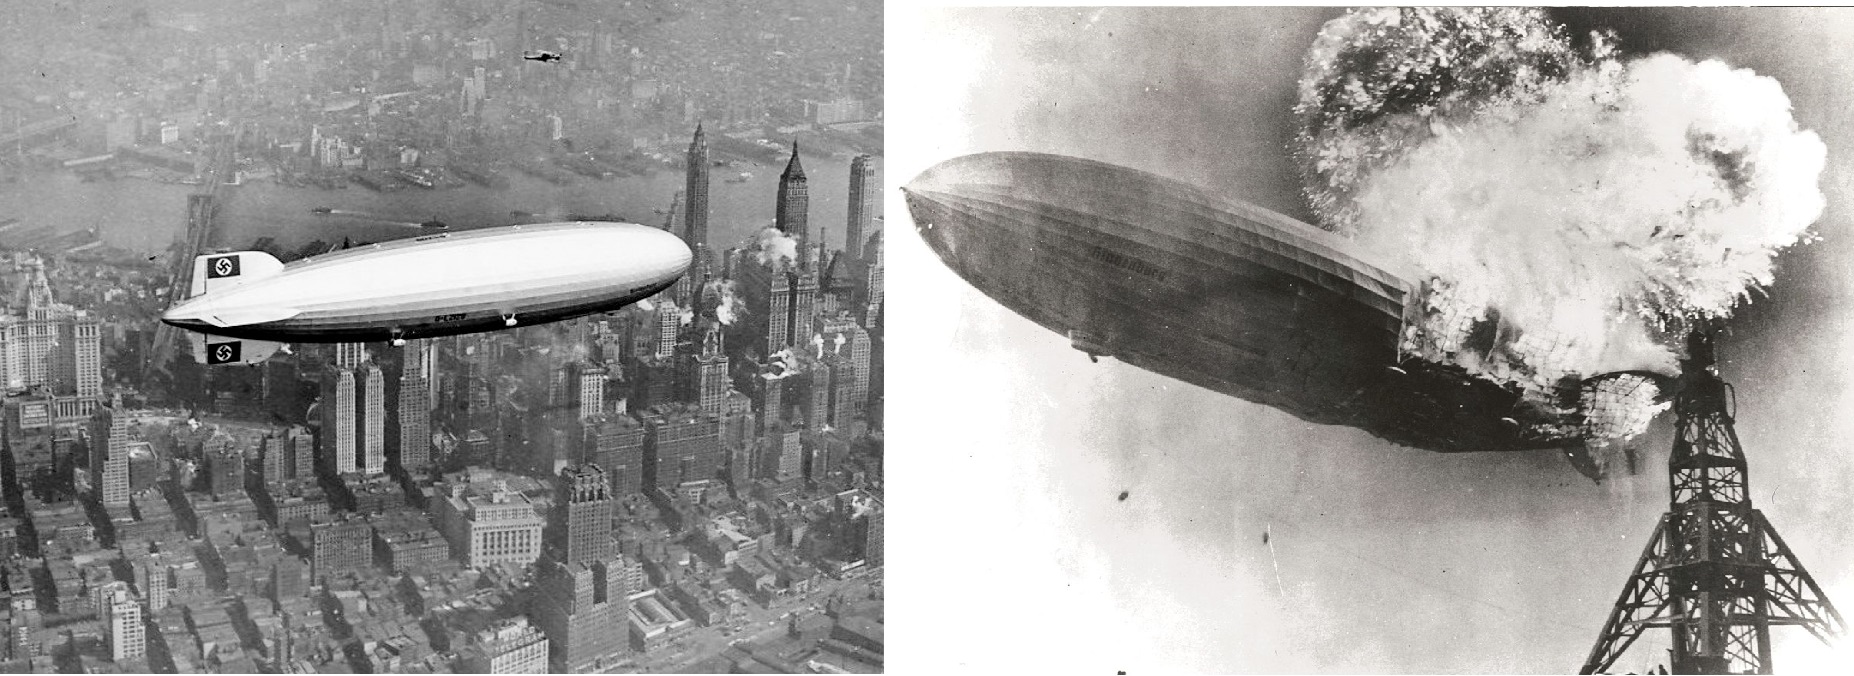 German airship Hindenburg (left) and Hindenburg crashing and exploding into a tower.